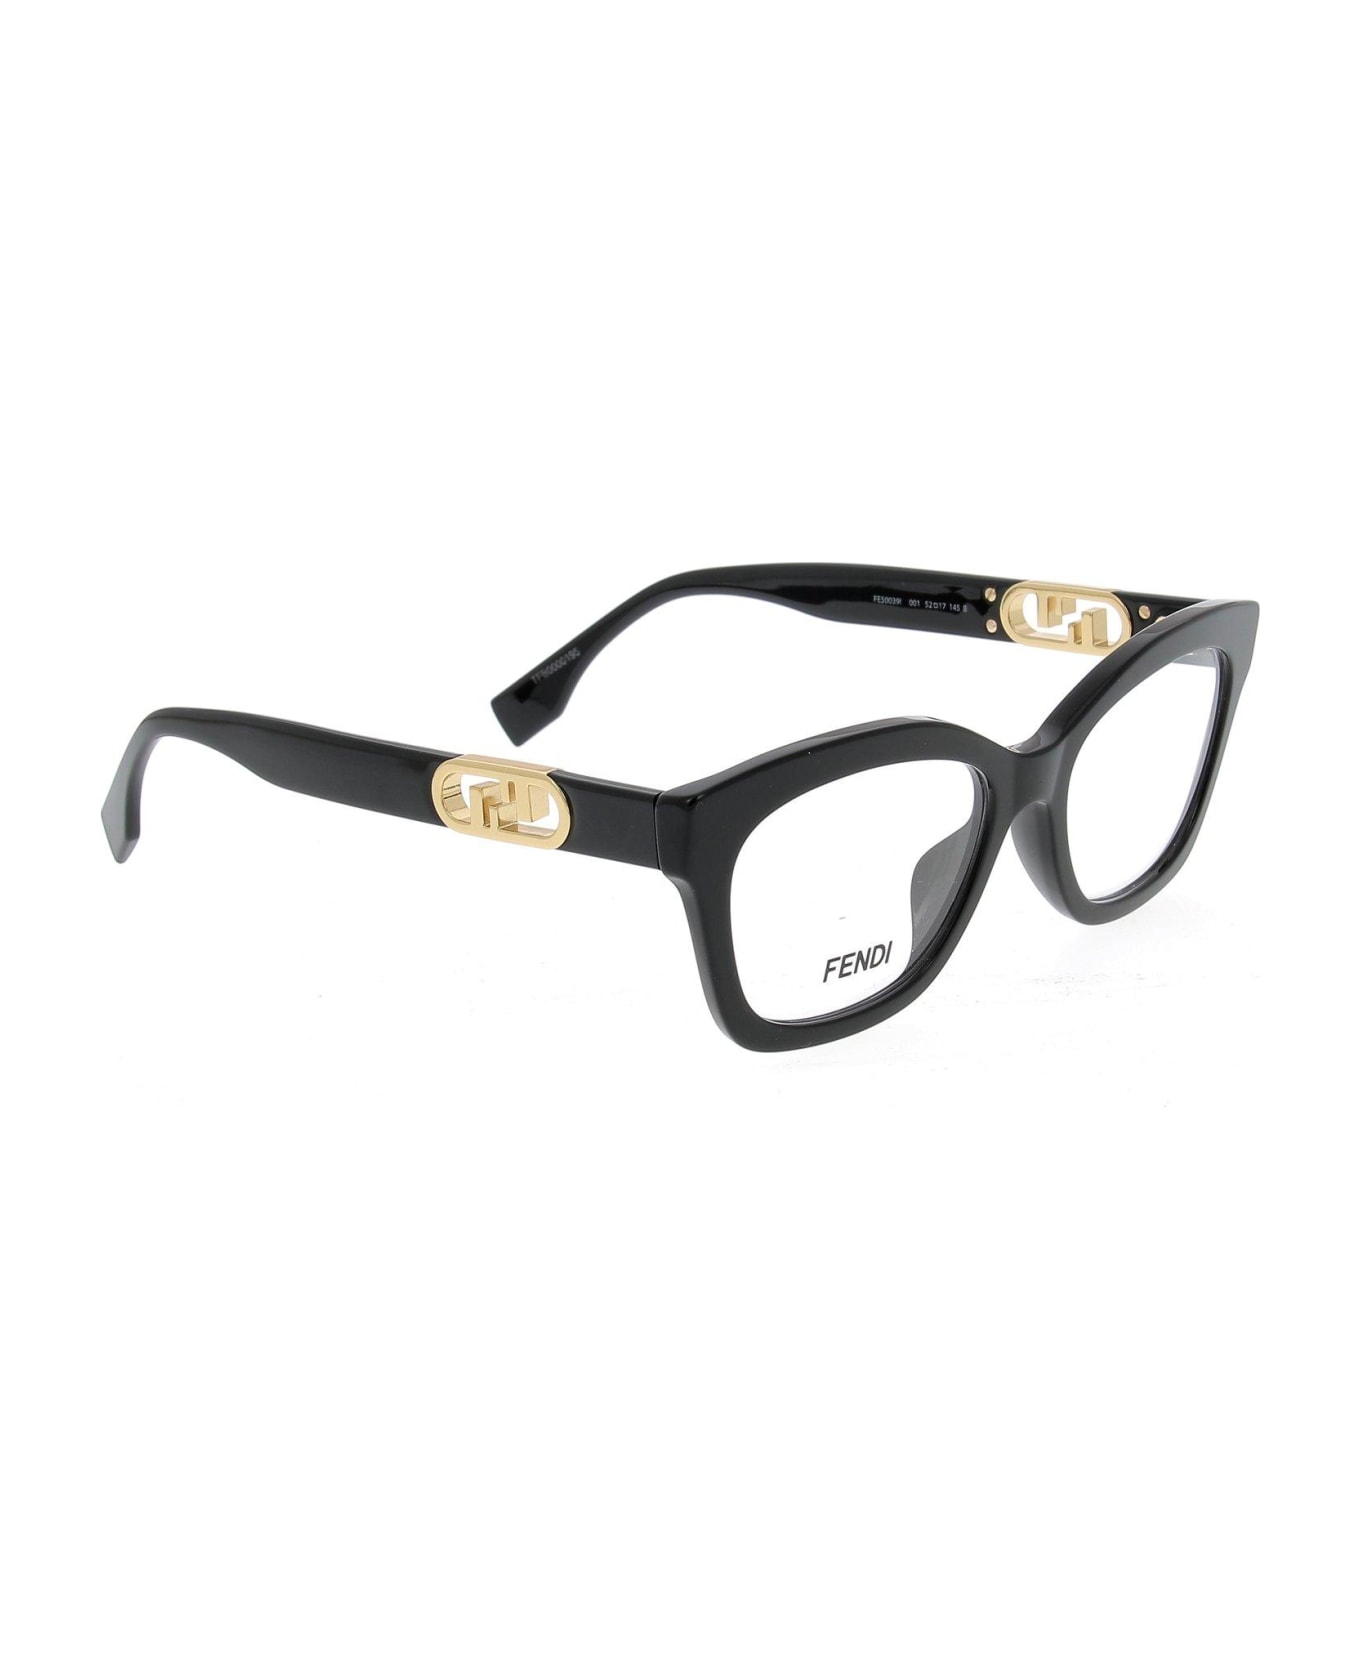 Fendi Eyewear Oval Frame Glasses - 001